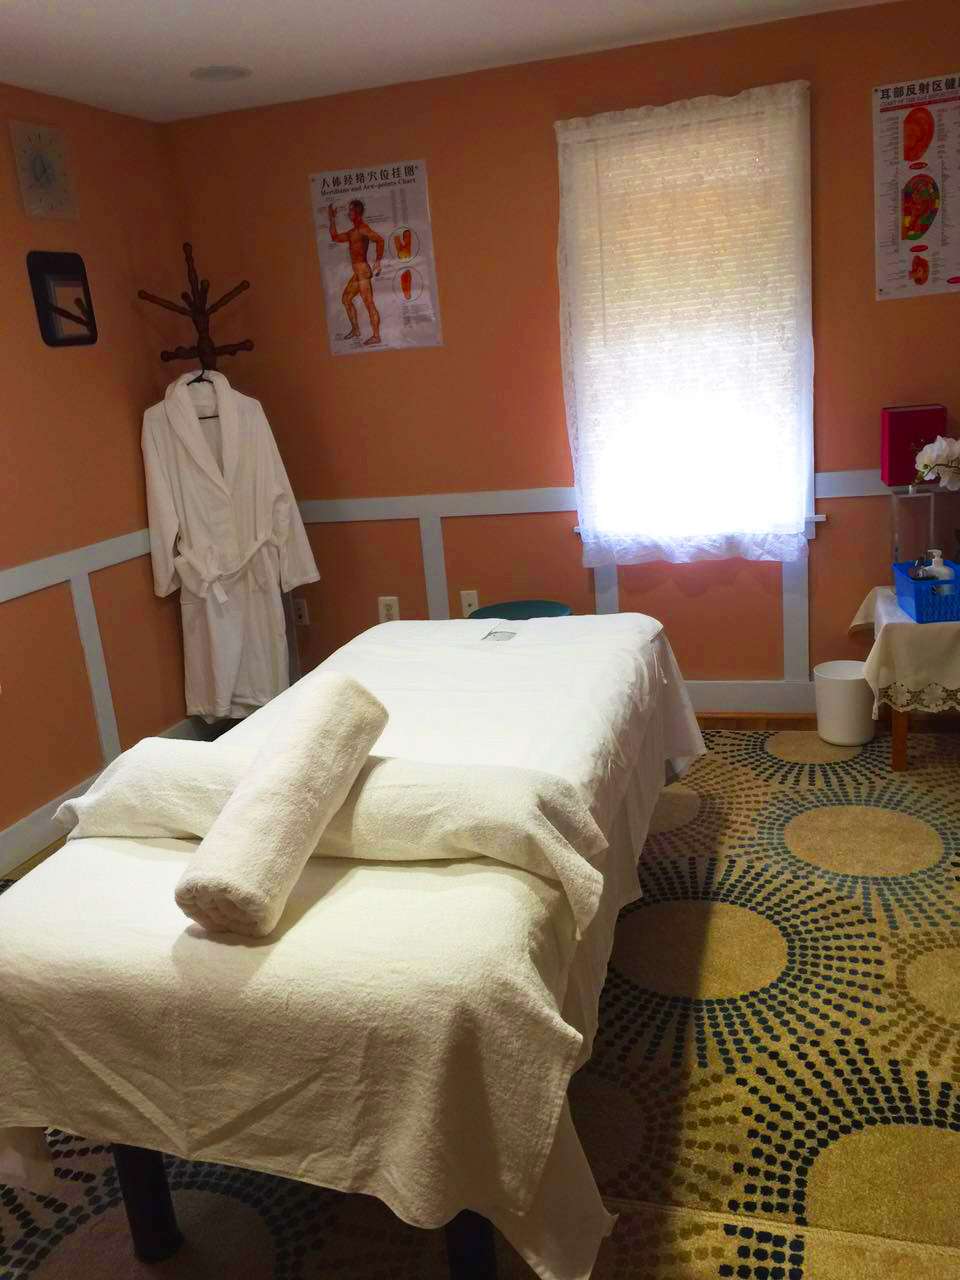 Village Spa - Asian Massage SPA Glenside, PA | 430 N Easton Rd, Glenside, PA 19038, USA | Phone: (215) 987-8888